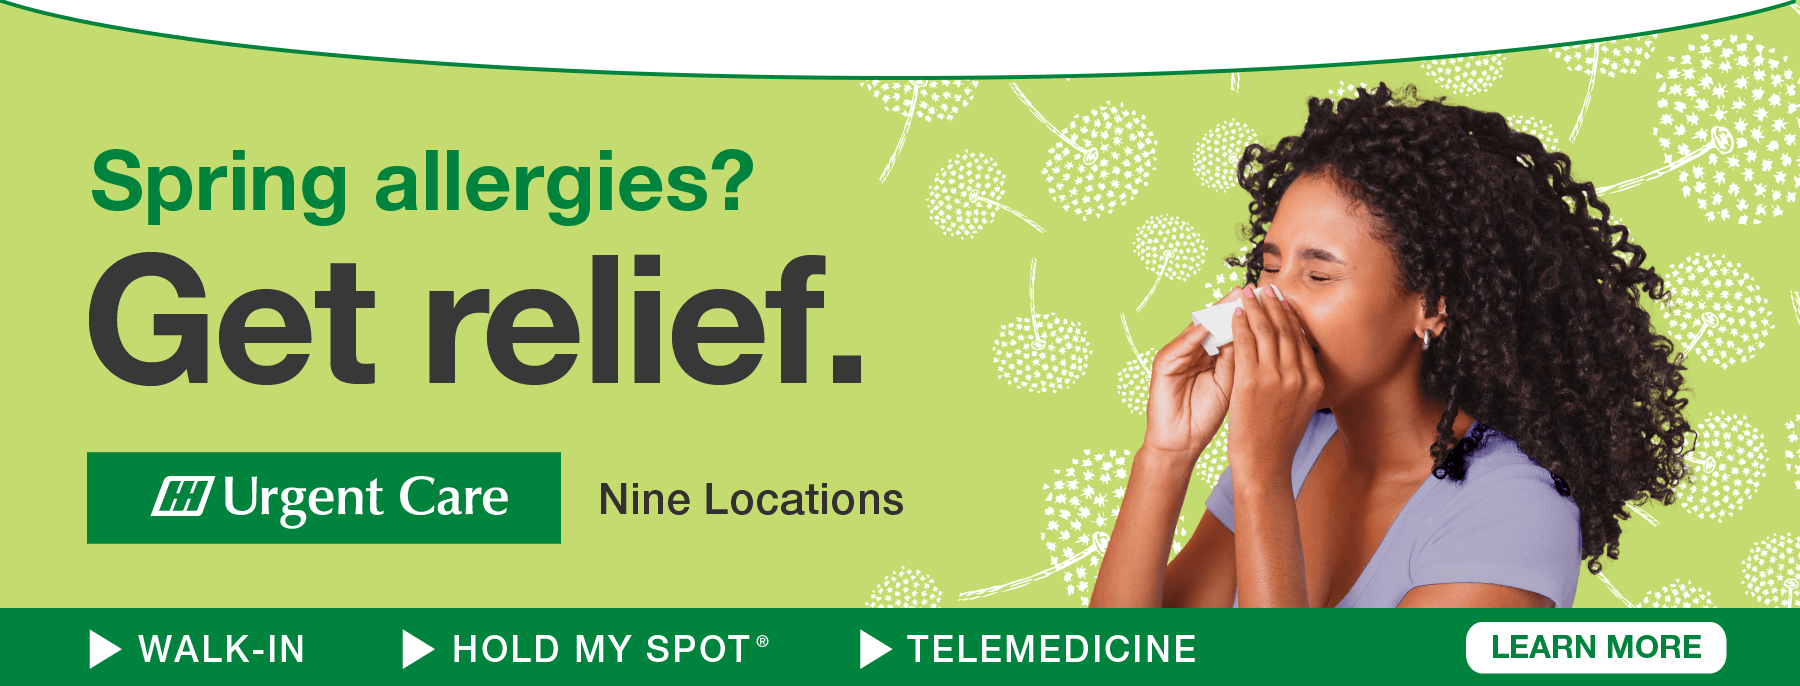 Spring allergies? Get relief. HH Urgent Care